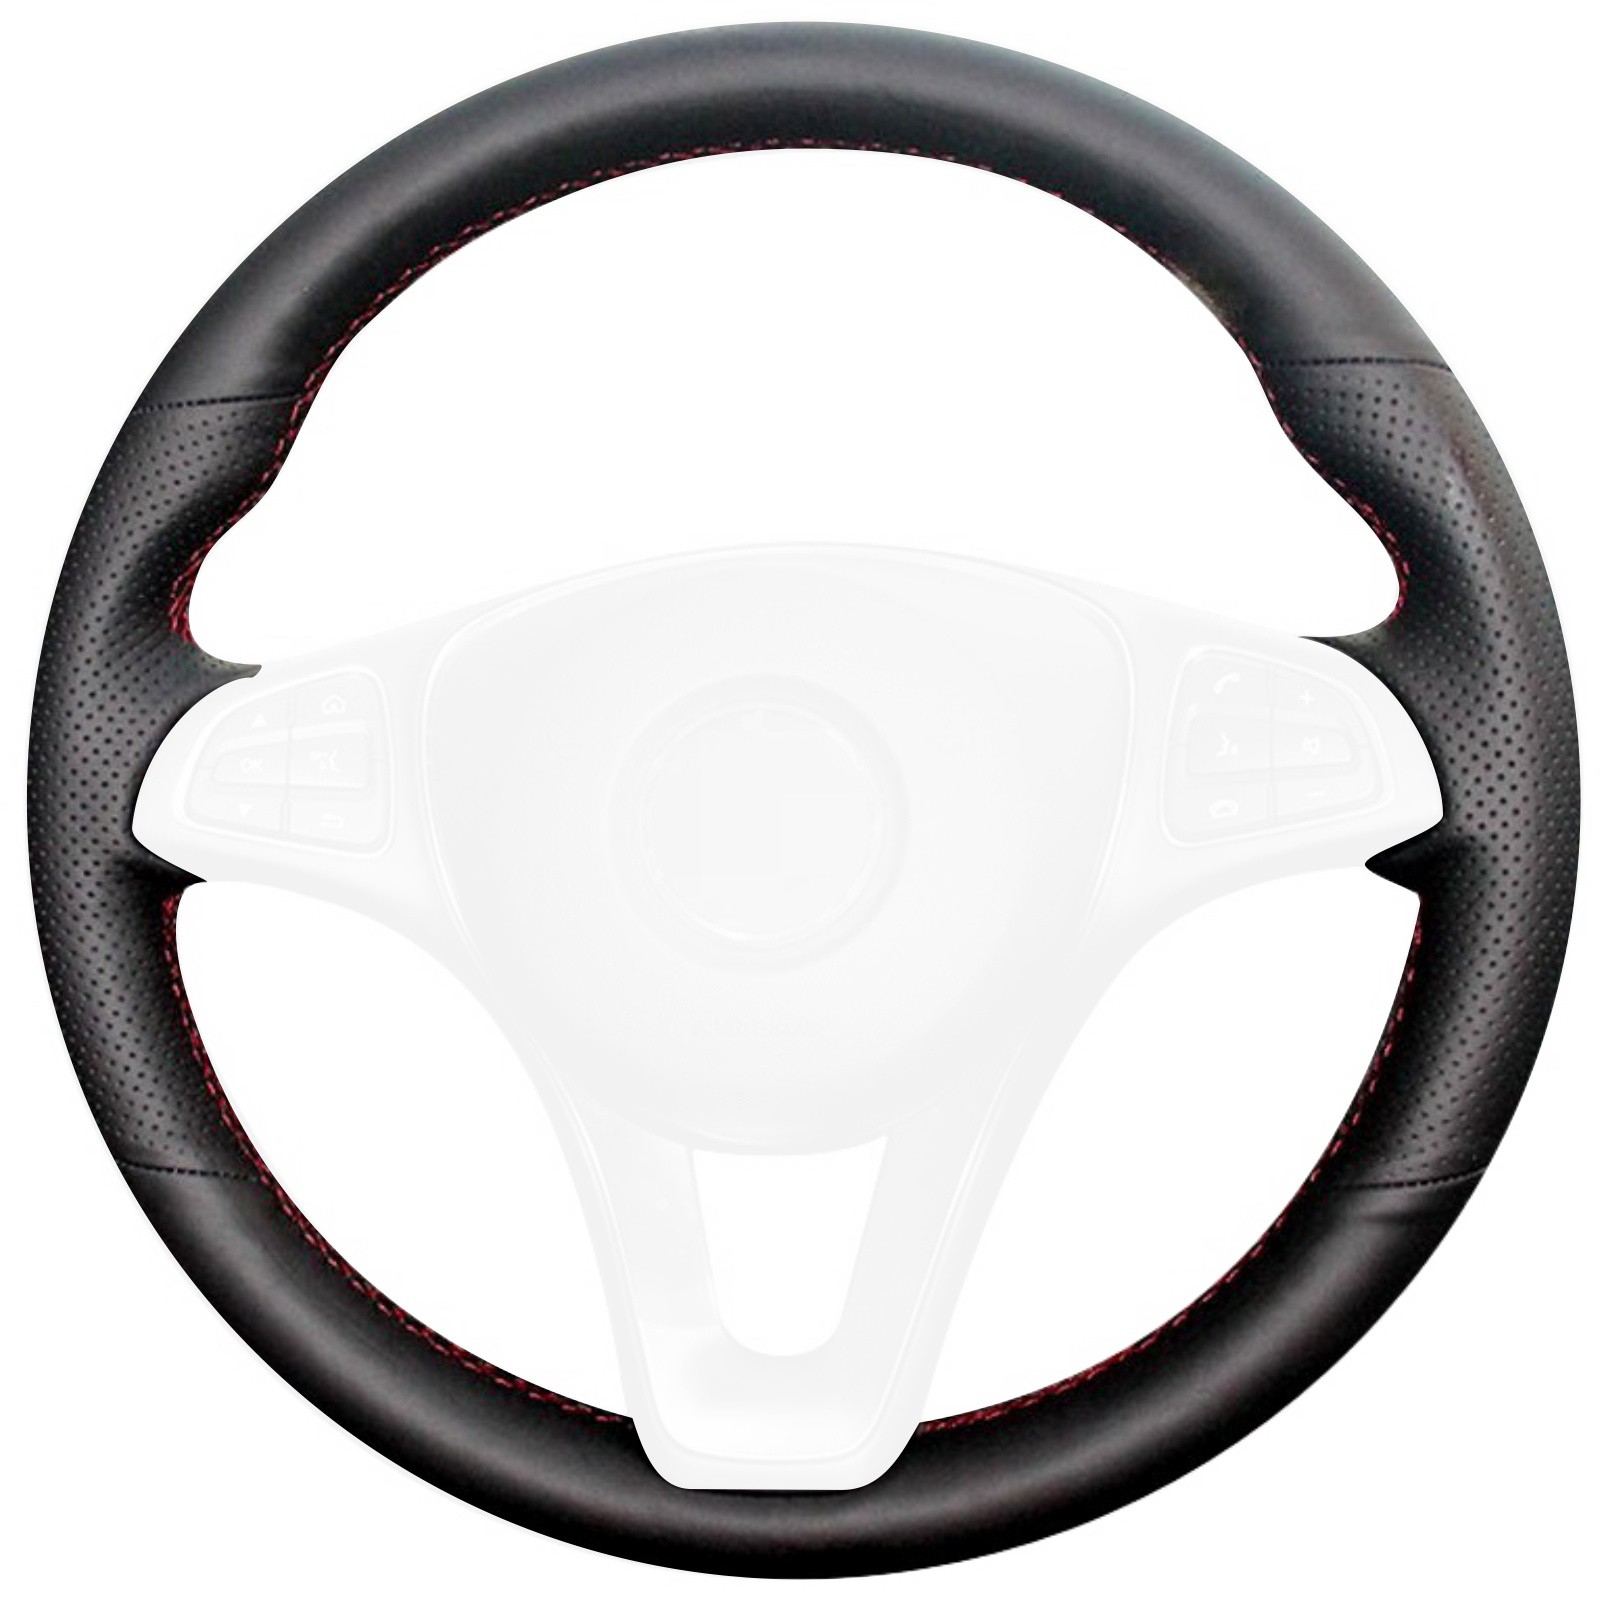 2015-20 Mercedes GLA steering wheel cover